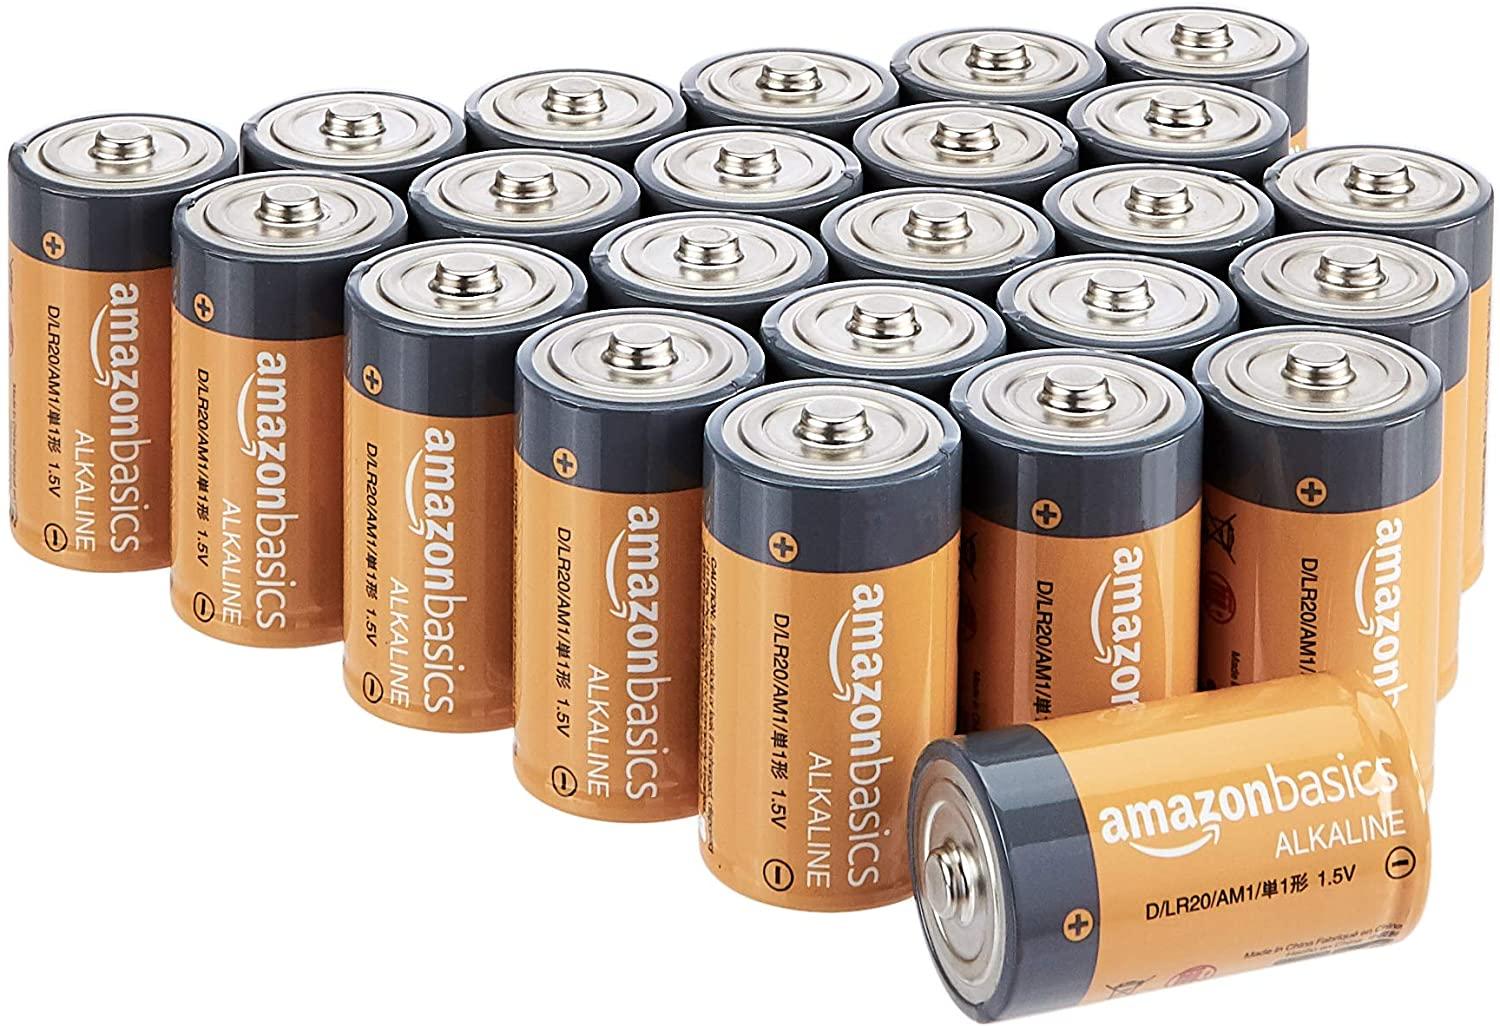 24 Amazon Basics D Cell 1.5V Everyday Alkaline Batteries for $15.87 Shipped